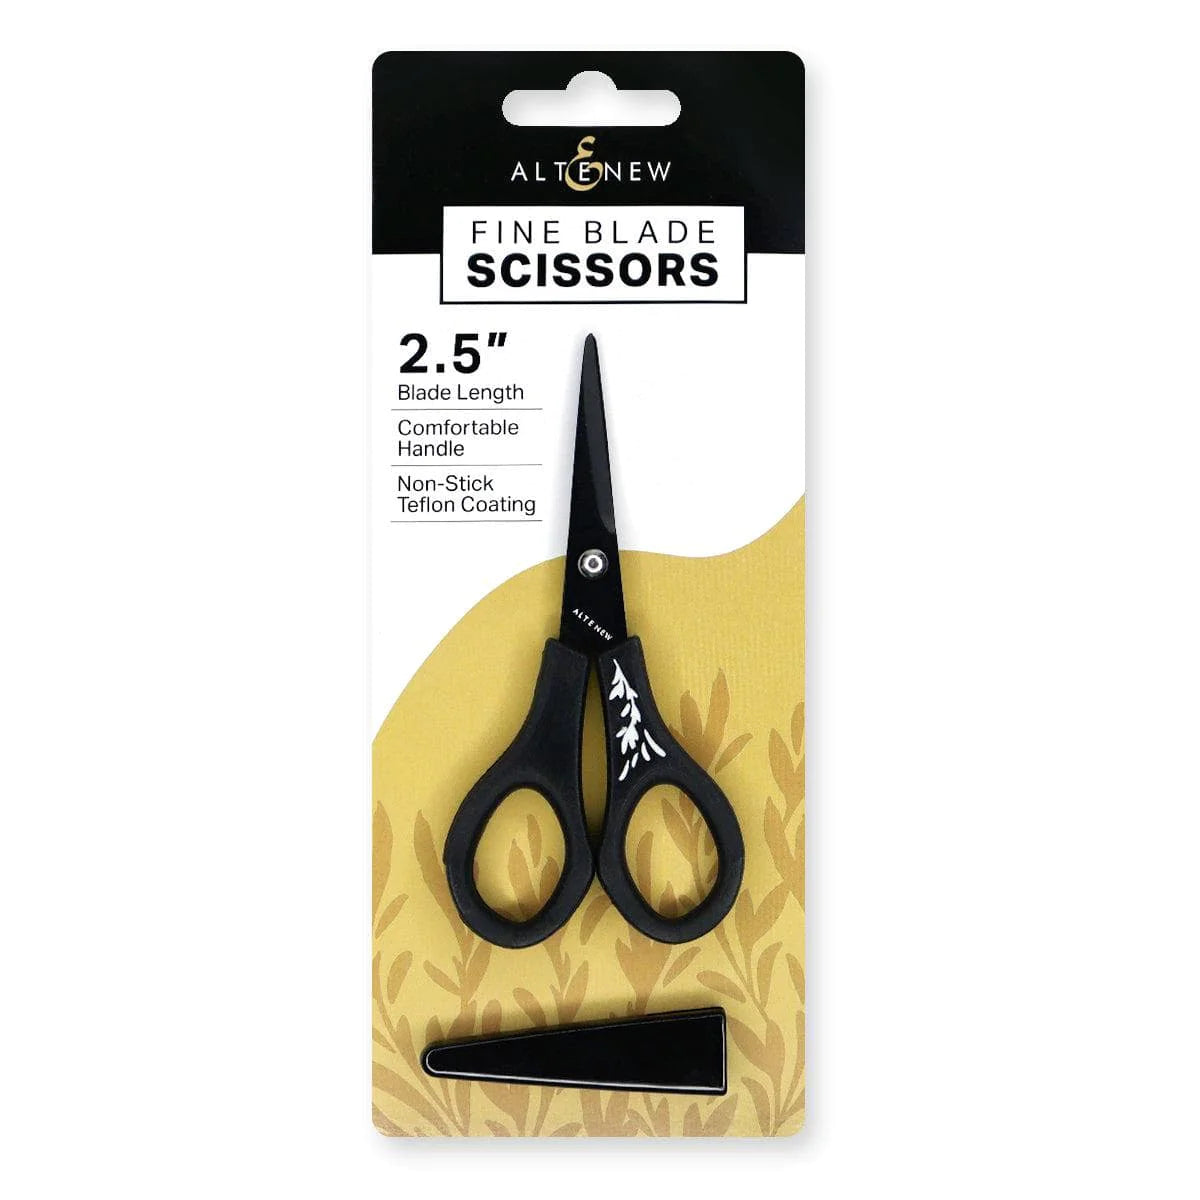 Fine Blade Scissors